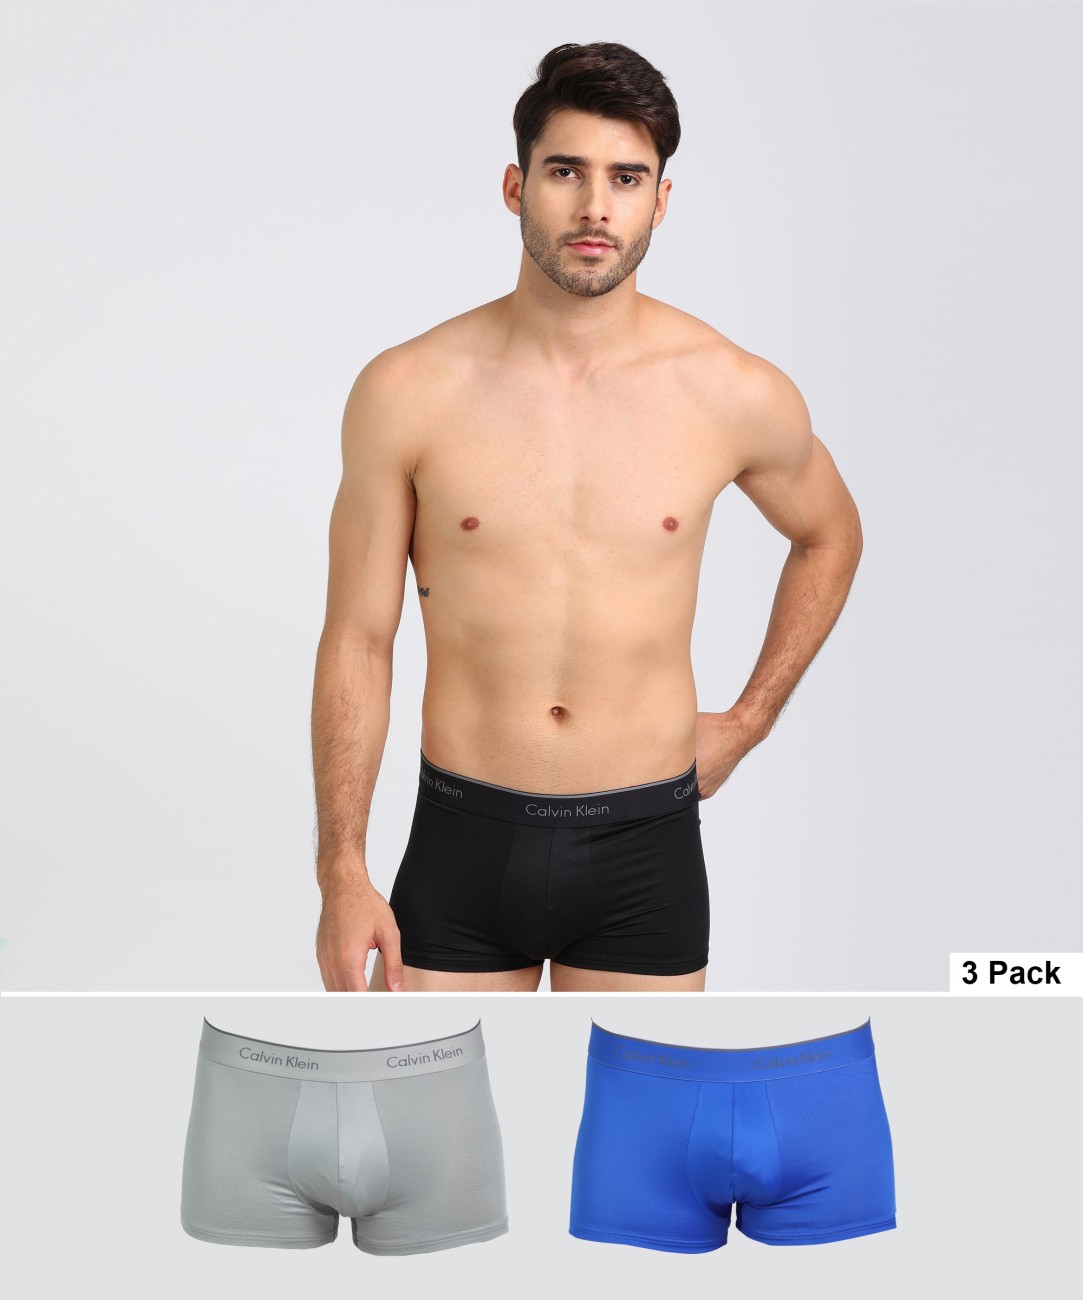 Men's Underwear (पुरुषों के अंडरवियर) - Buy Online Latest Collection of  Men's Underwear for men in India at Best Price